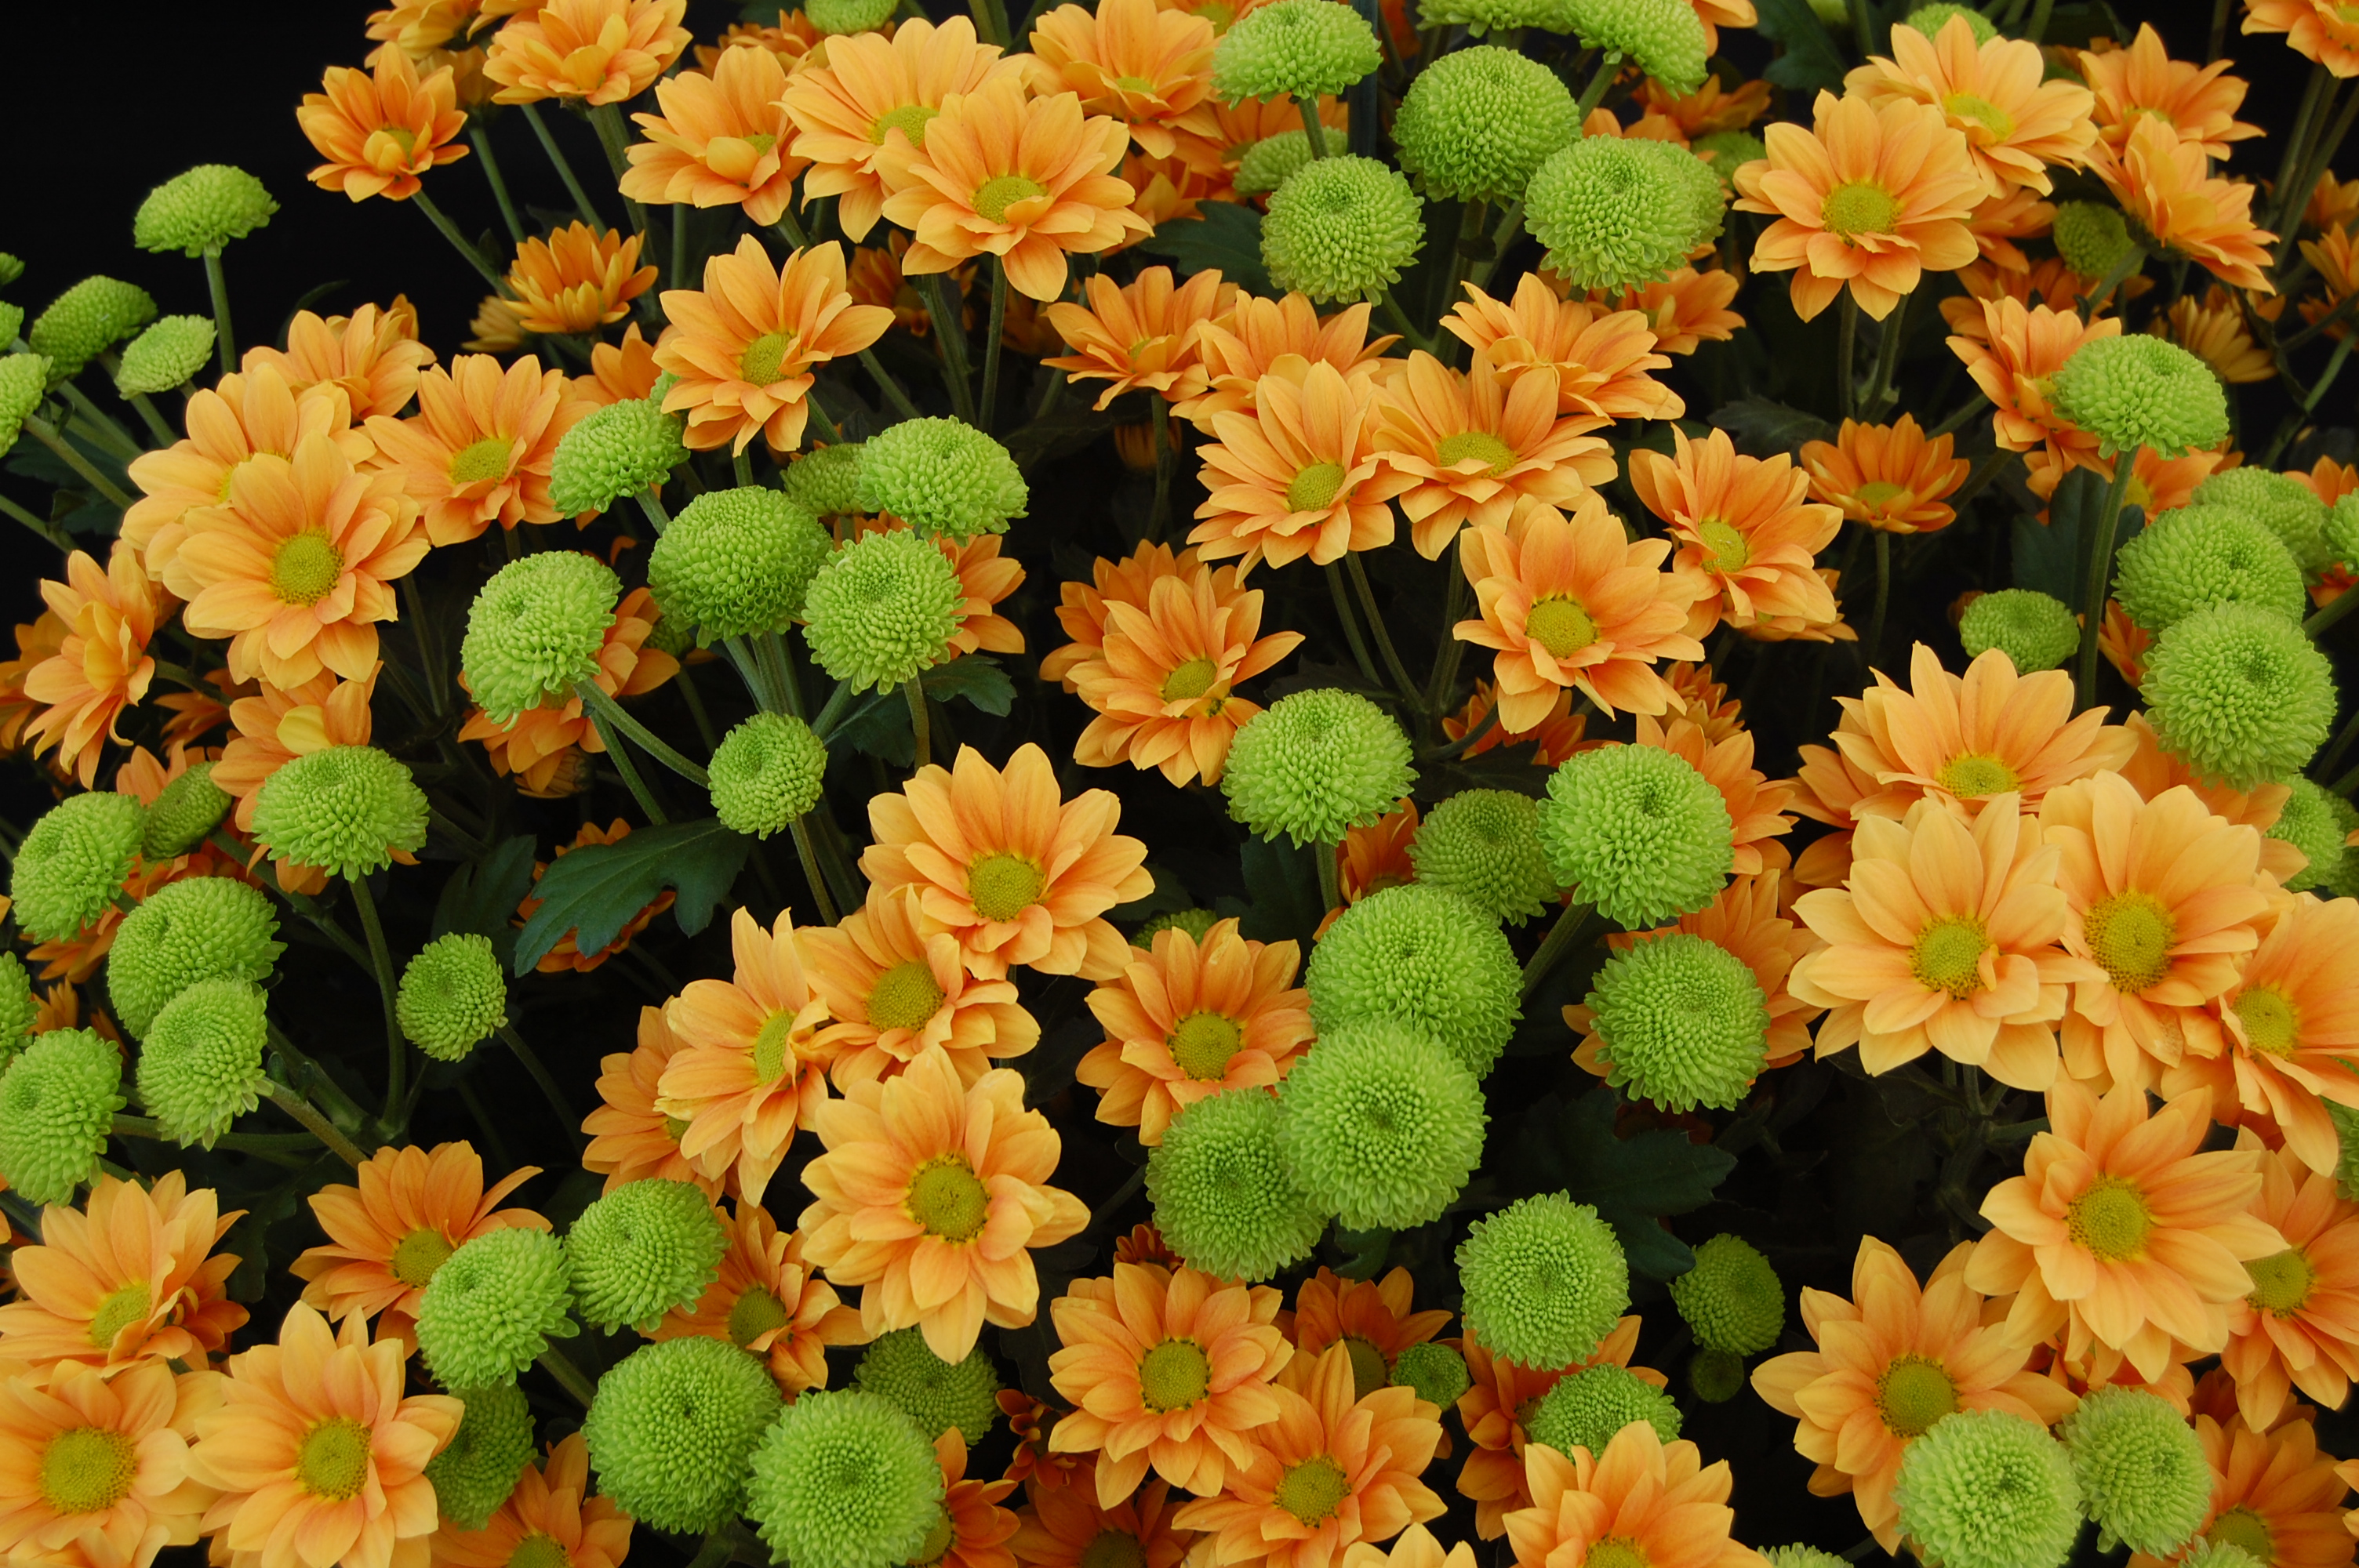 Chrysanthemum 'Enbee Wedding Golden' and 'Feeling Green'